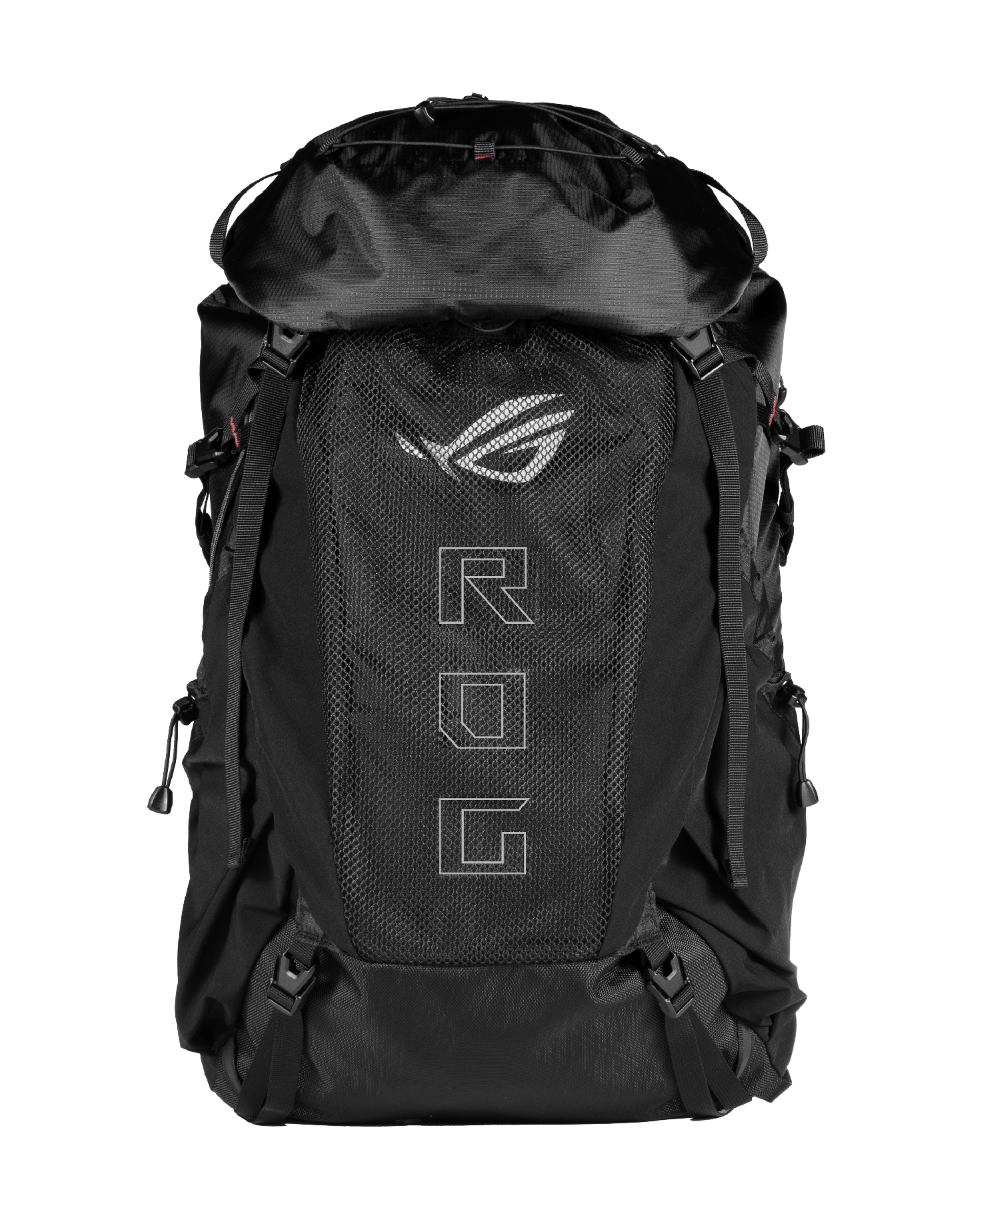 Rog Archer Ergoair Gaming Backpack Product Photo 01 • Digital Reg ...